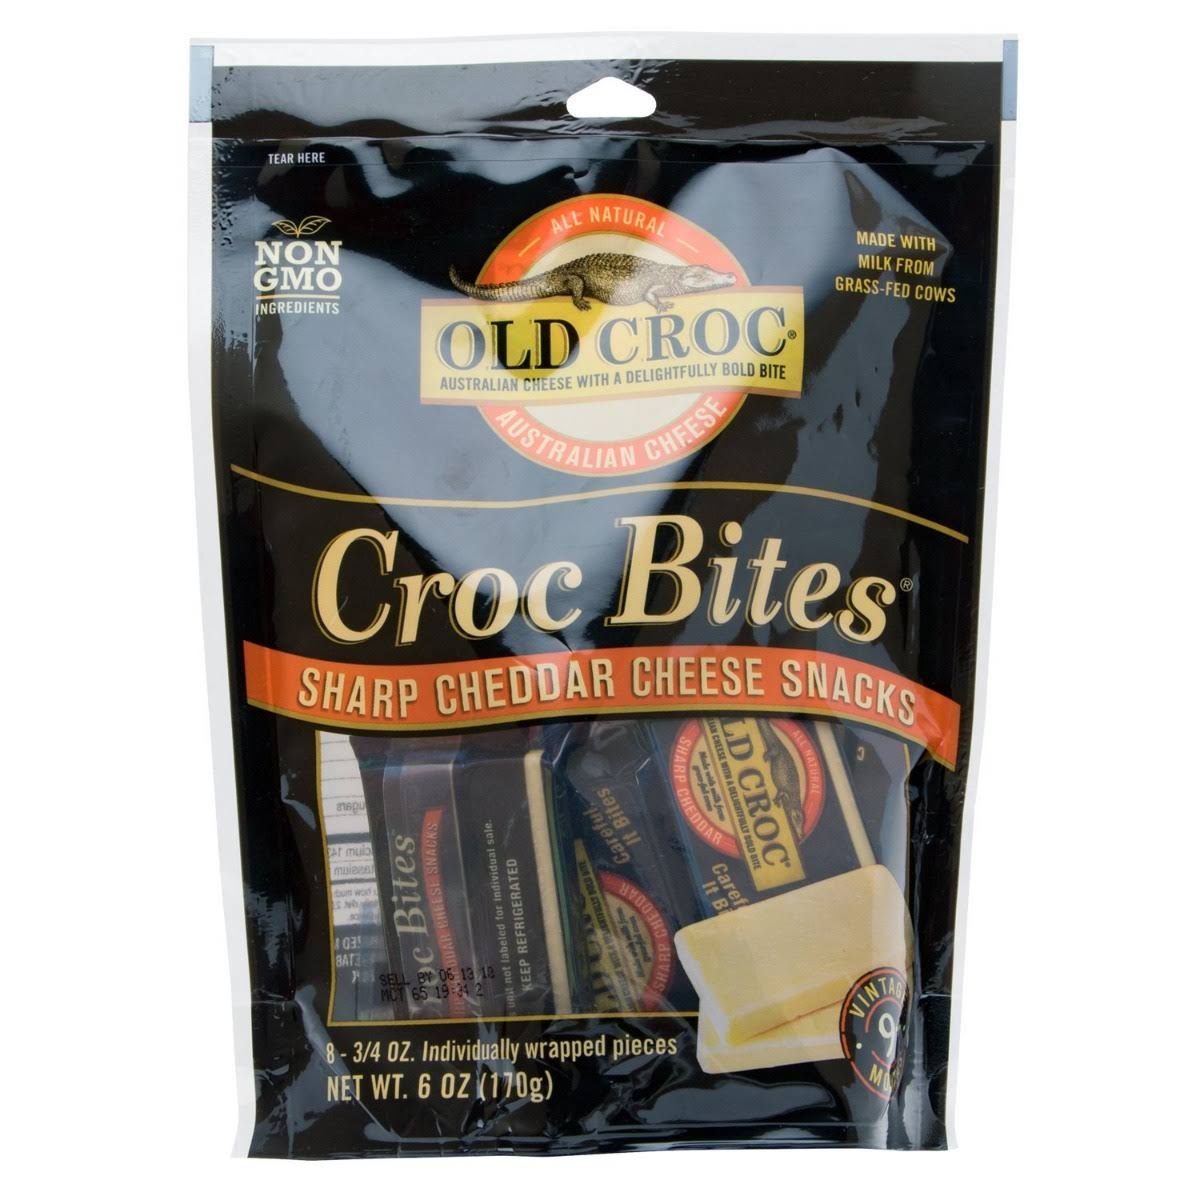 Old Croc Croc Bites Cheese Snacks, Sharp Cheddar - 8 pack, 0.75 oz snacks